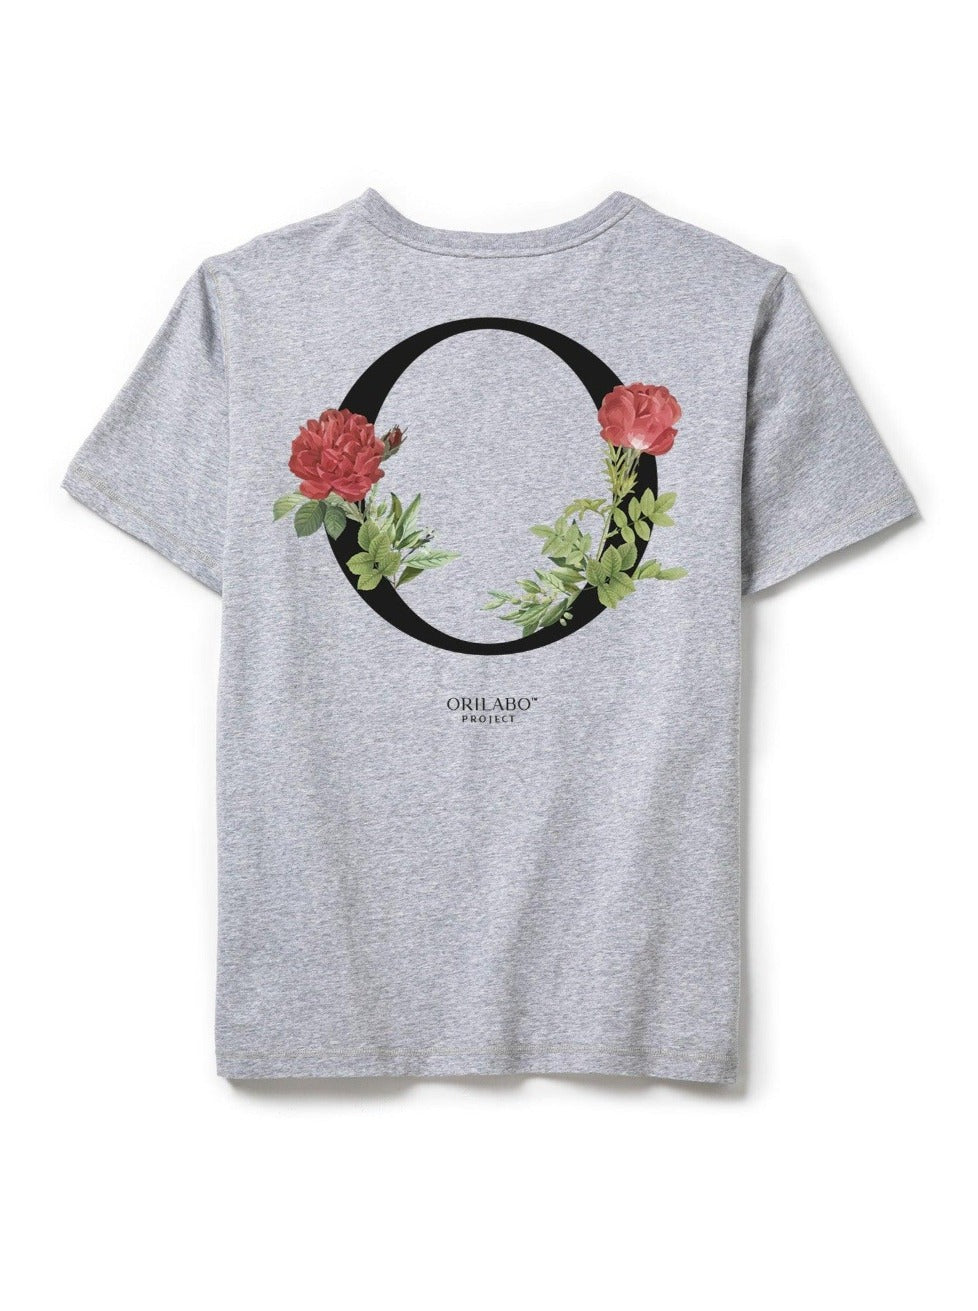 Men's ORILABO O-Roses Short Sleeve T-shirt - Grey - ORILABO Project